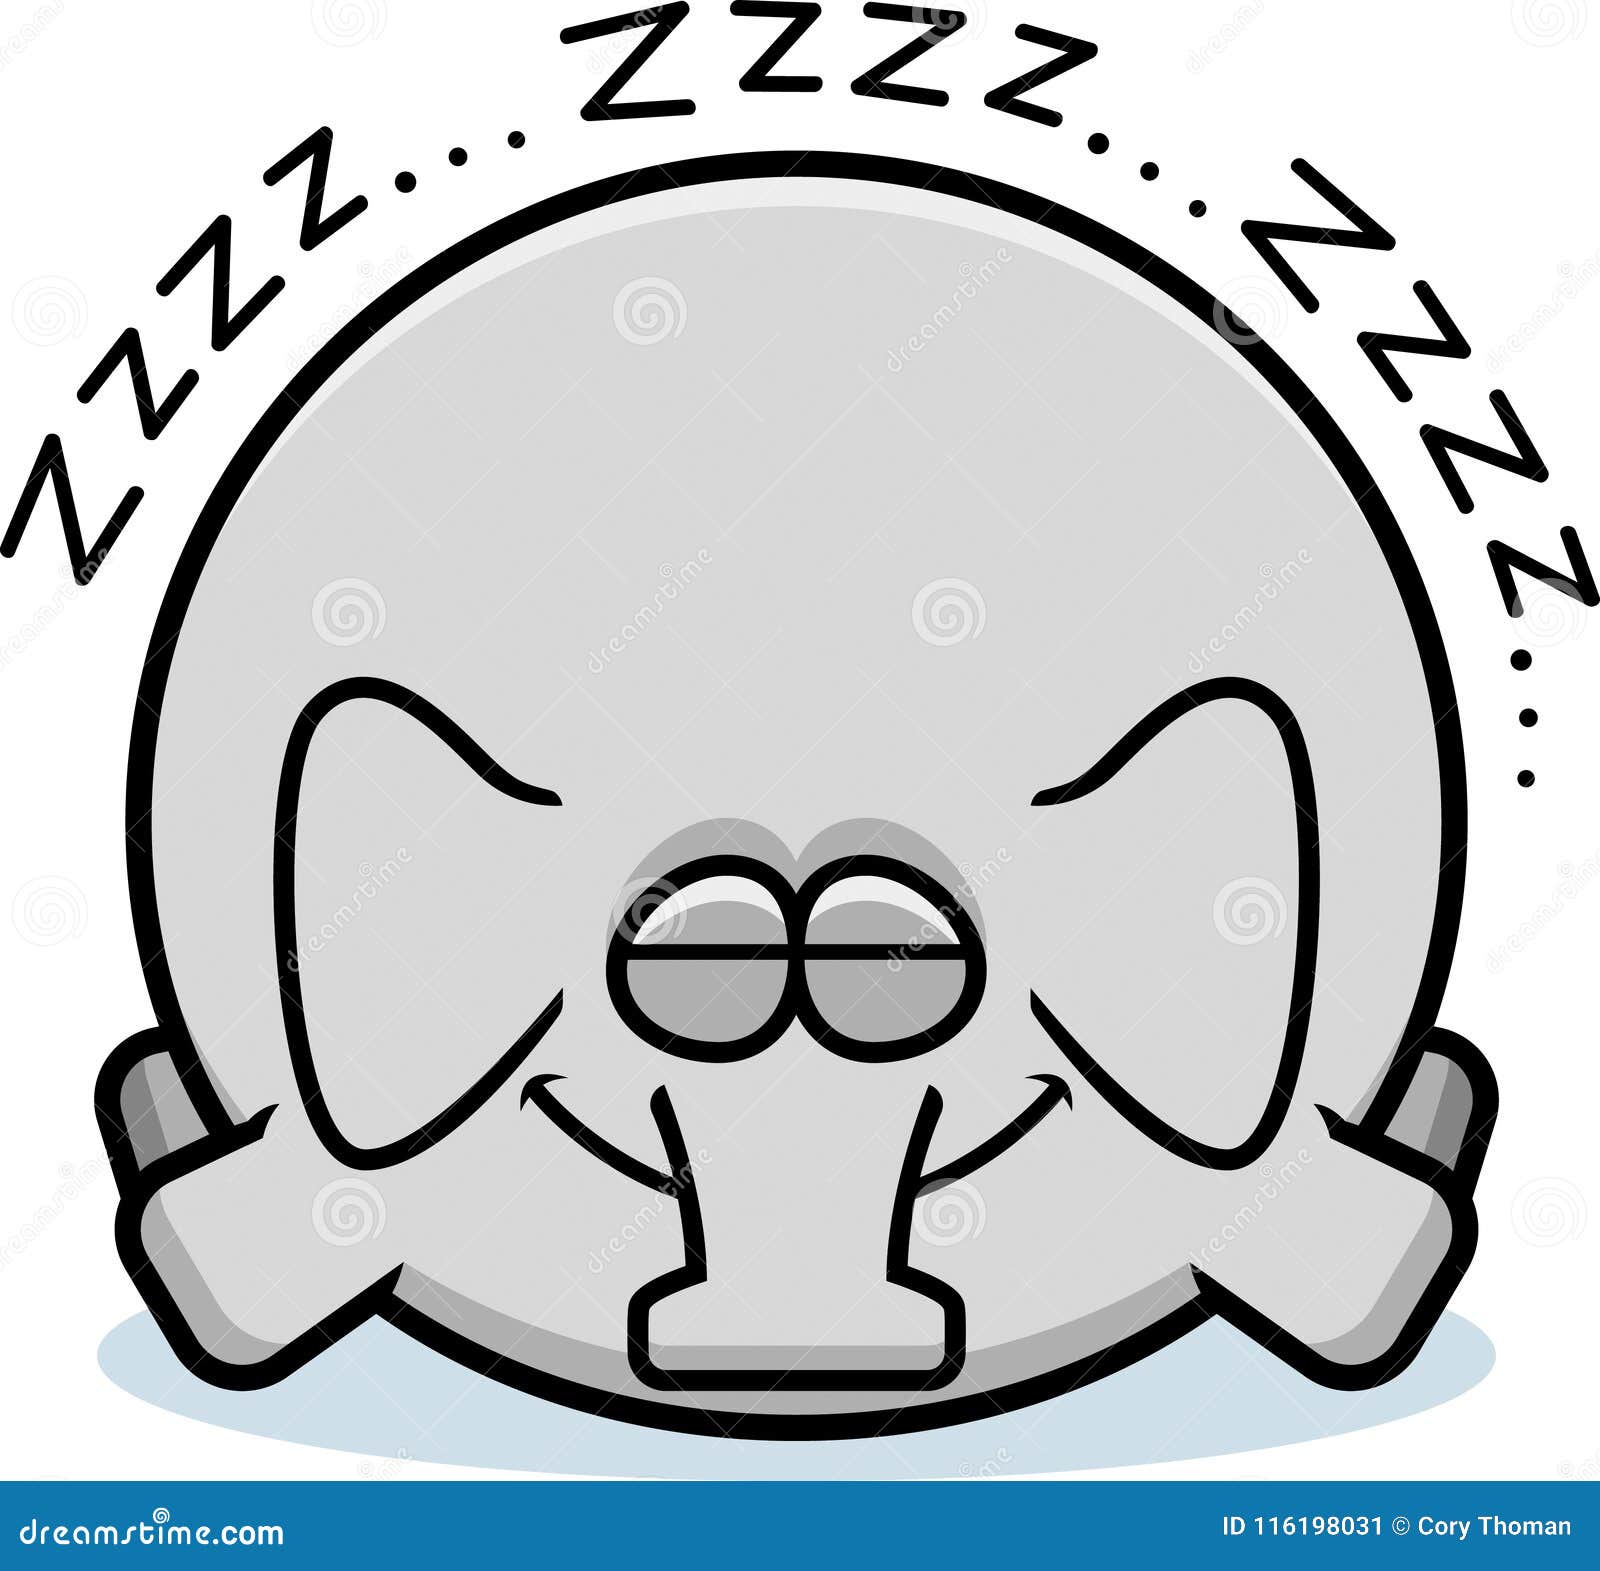 Download Cartoon Elephant Sleeping stock vector. Illustration of ...